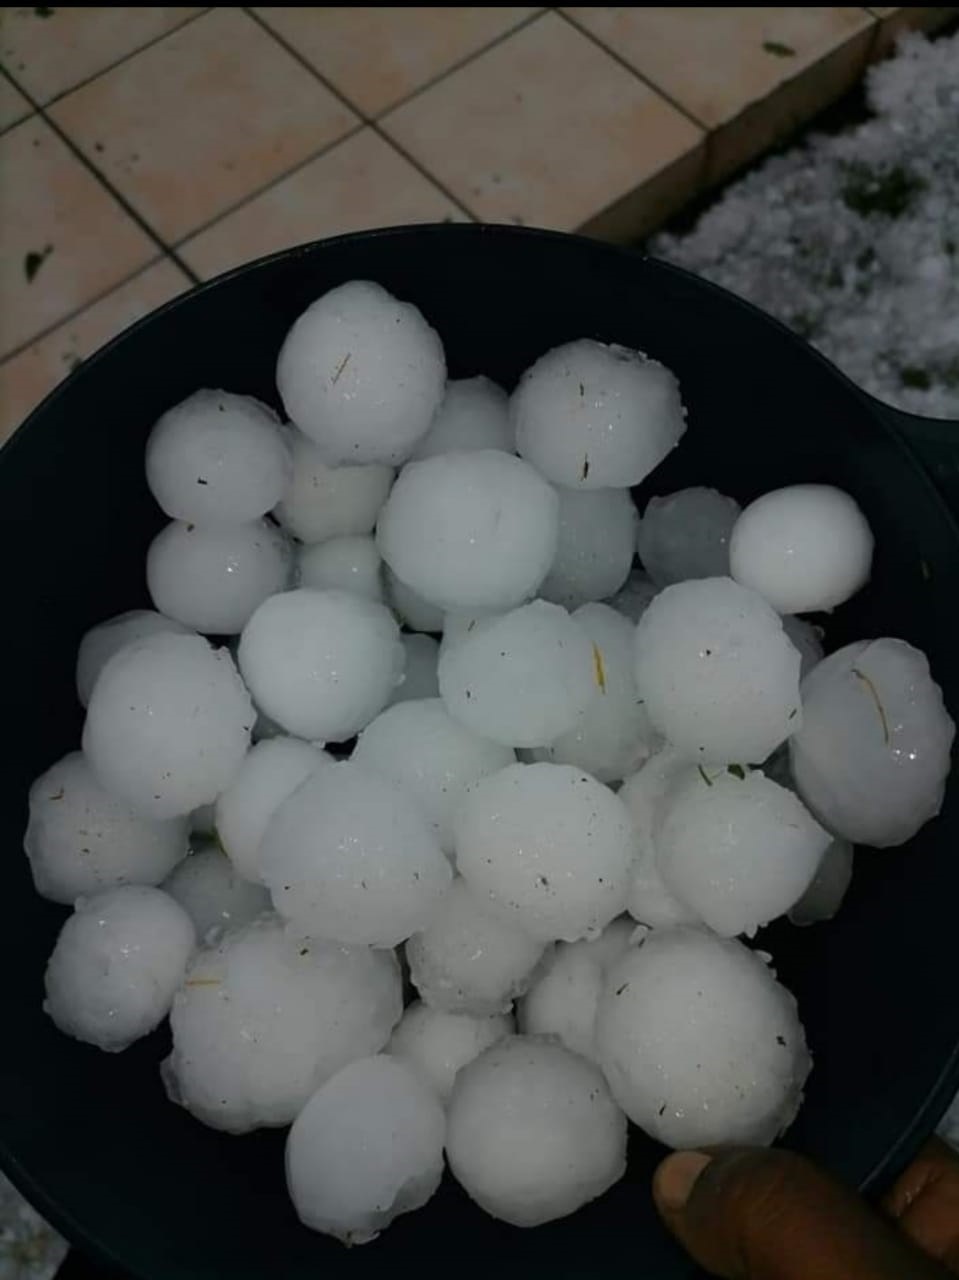 Huge hail storm balls